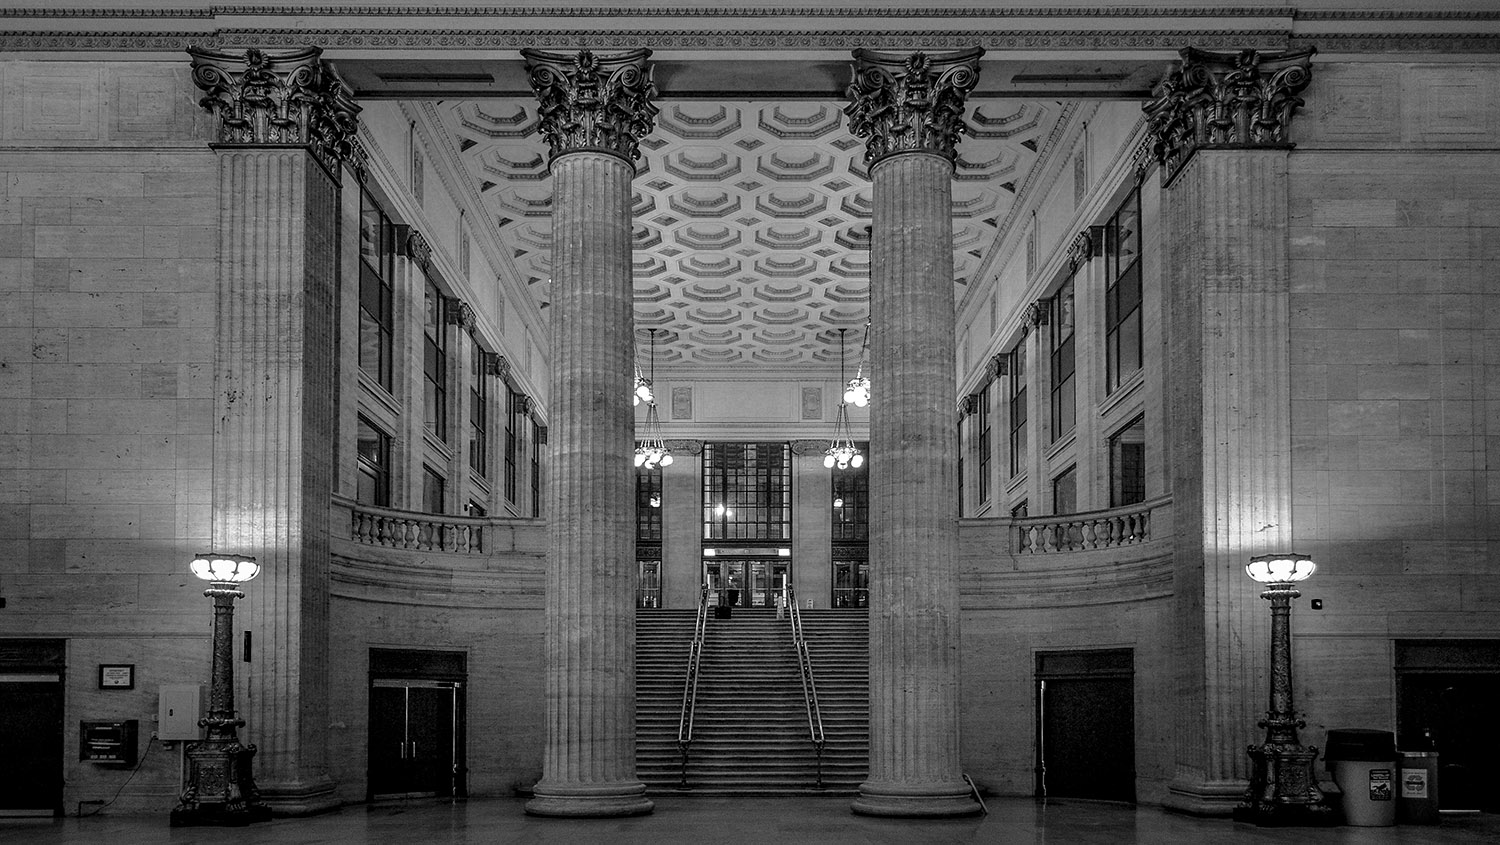 Union Station, Chicago